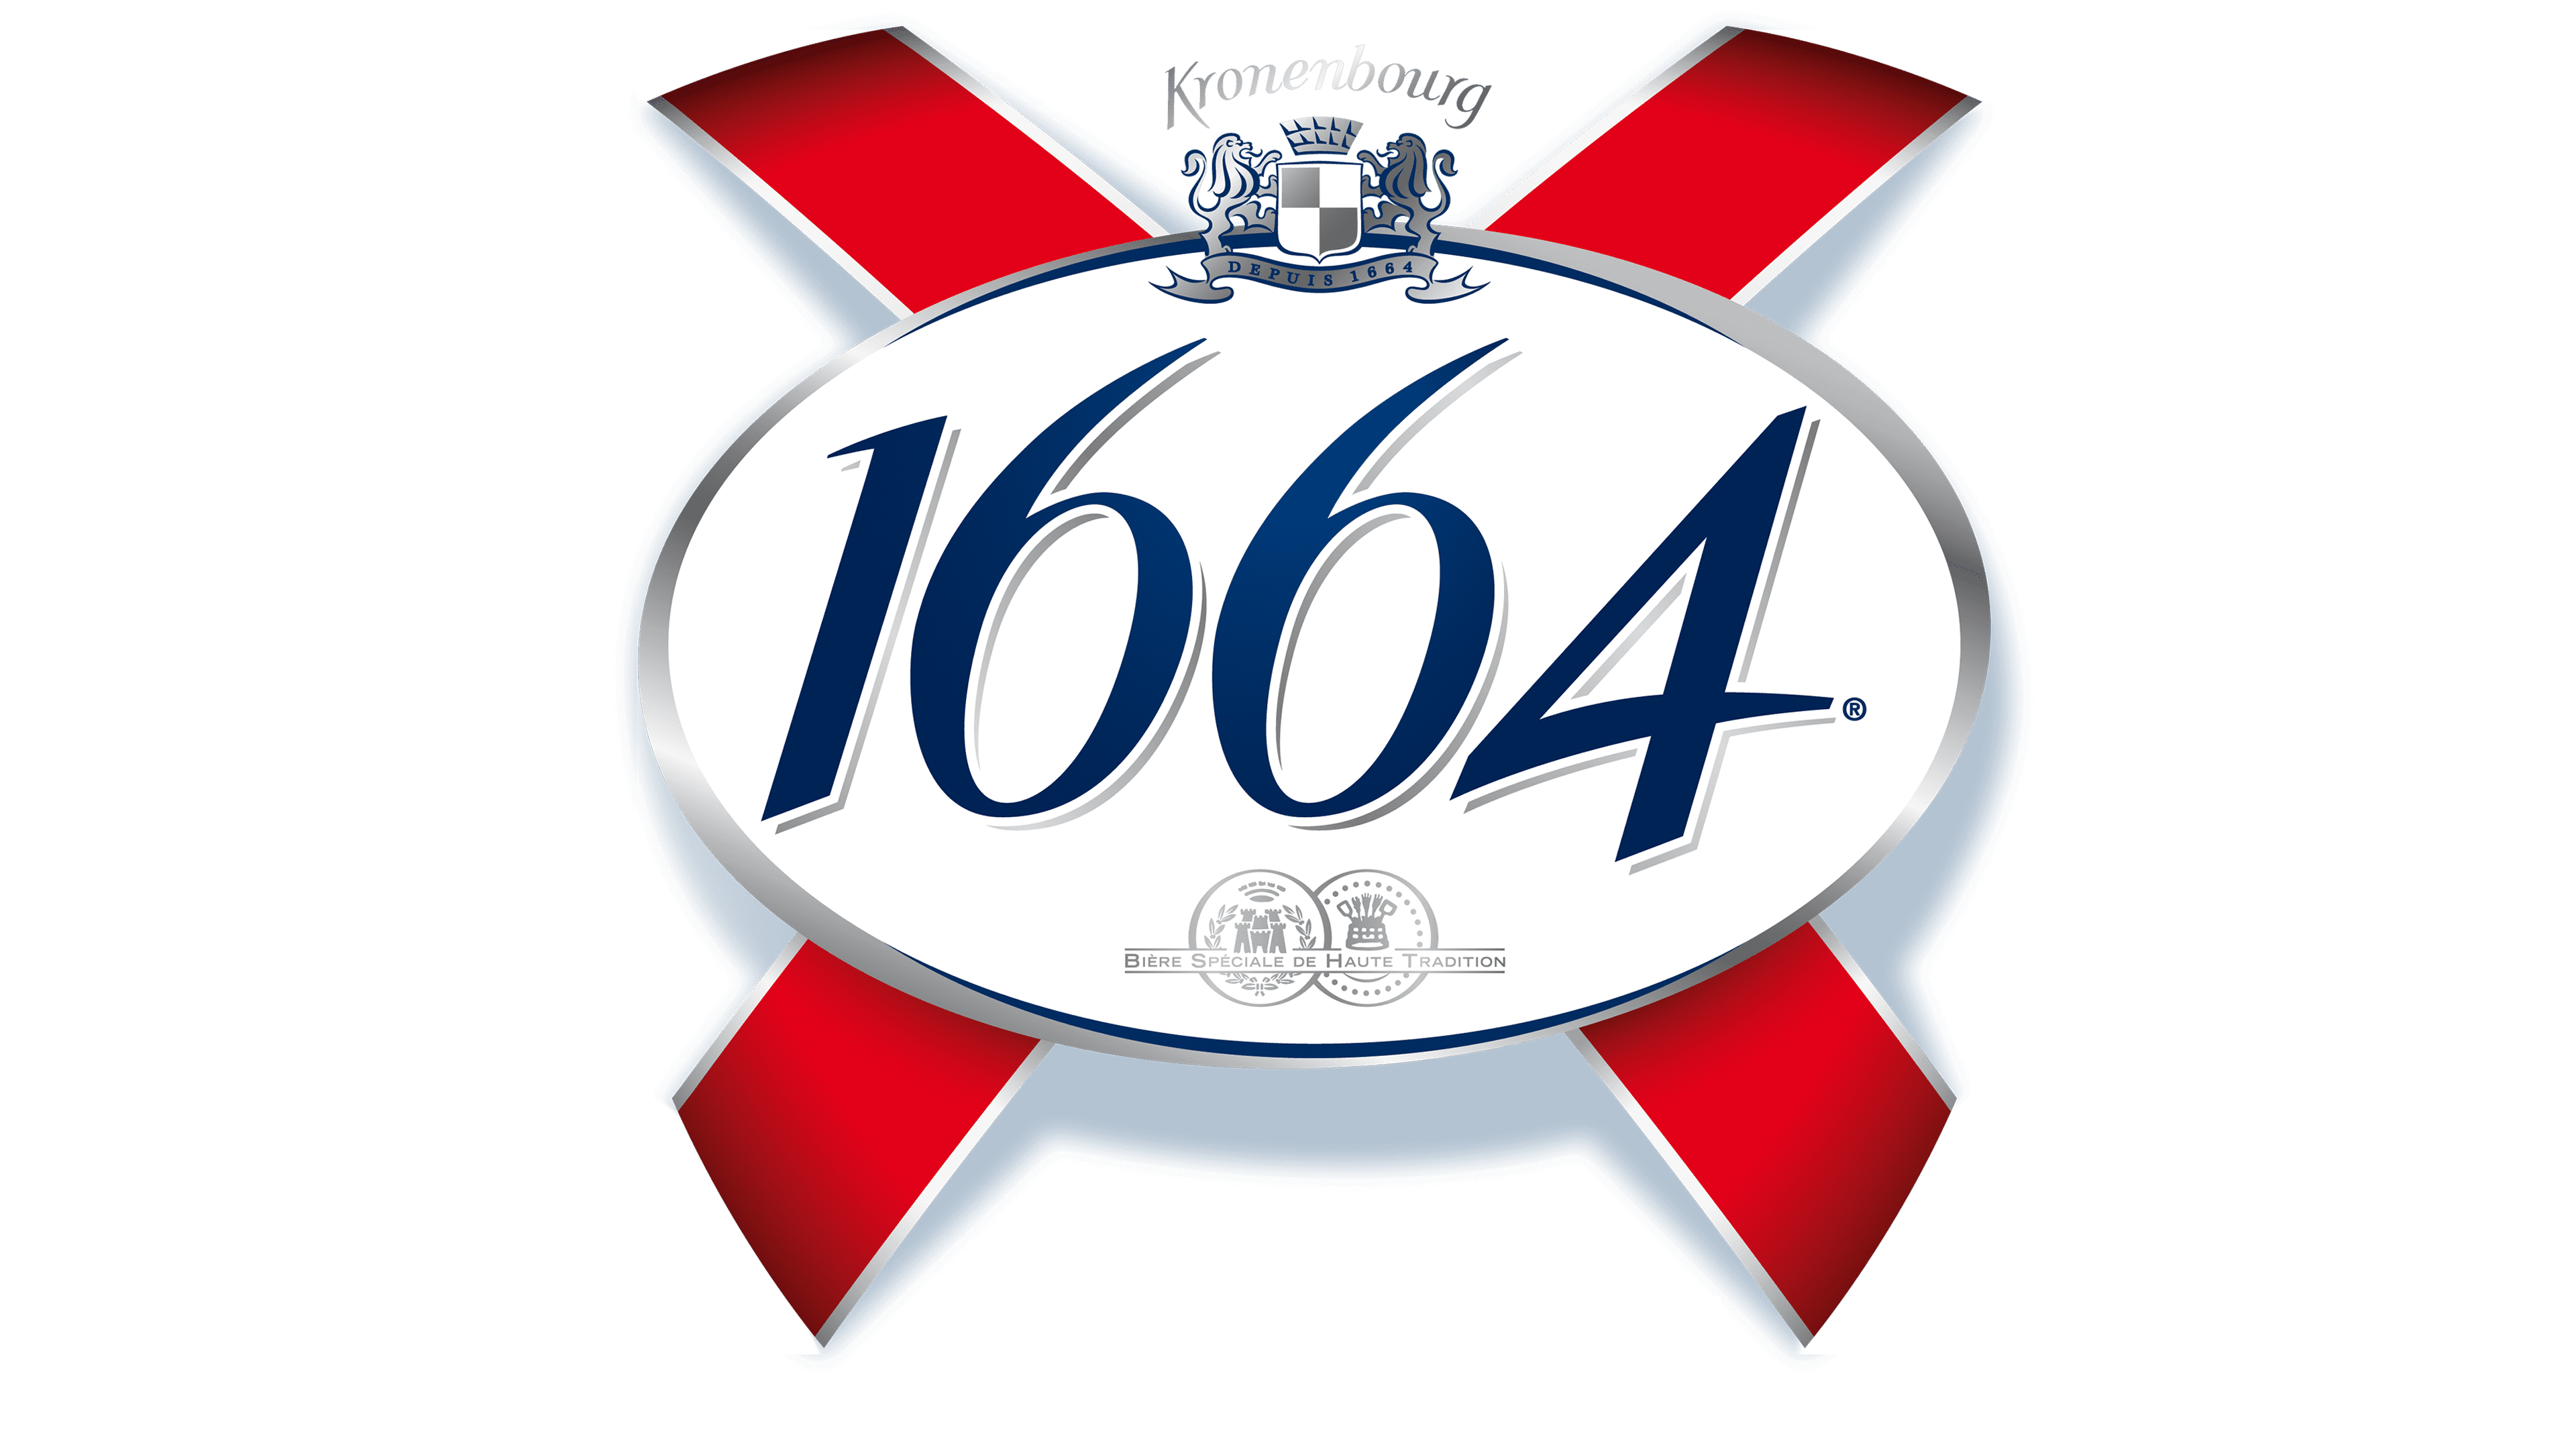 Kronenbourg 1664 Logo PNG Clipart Background